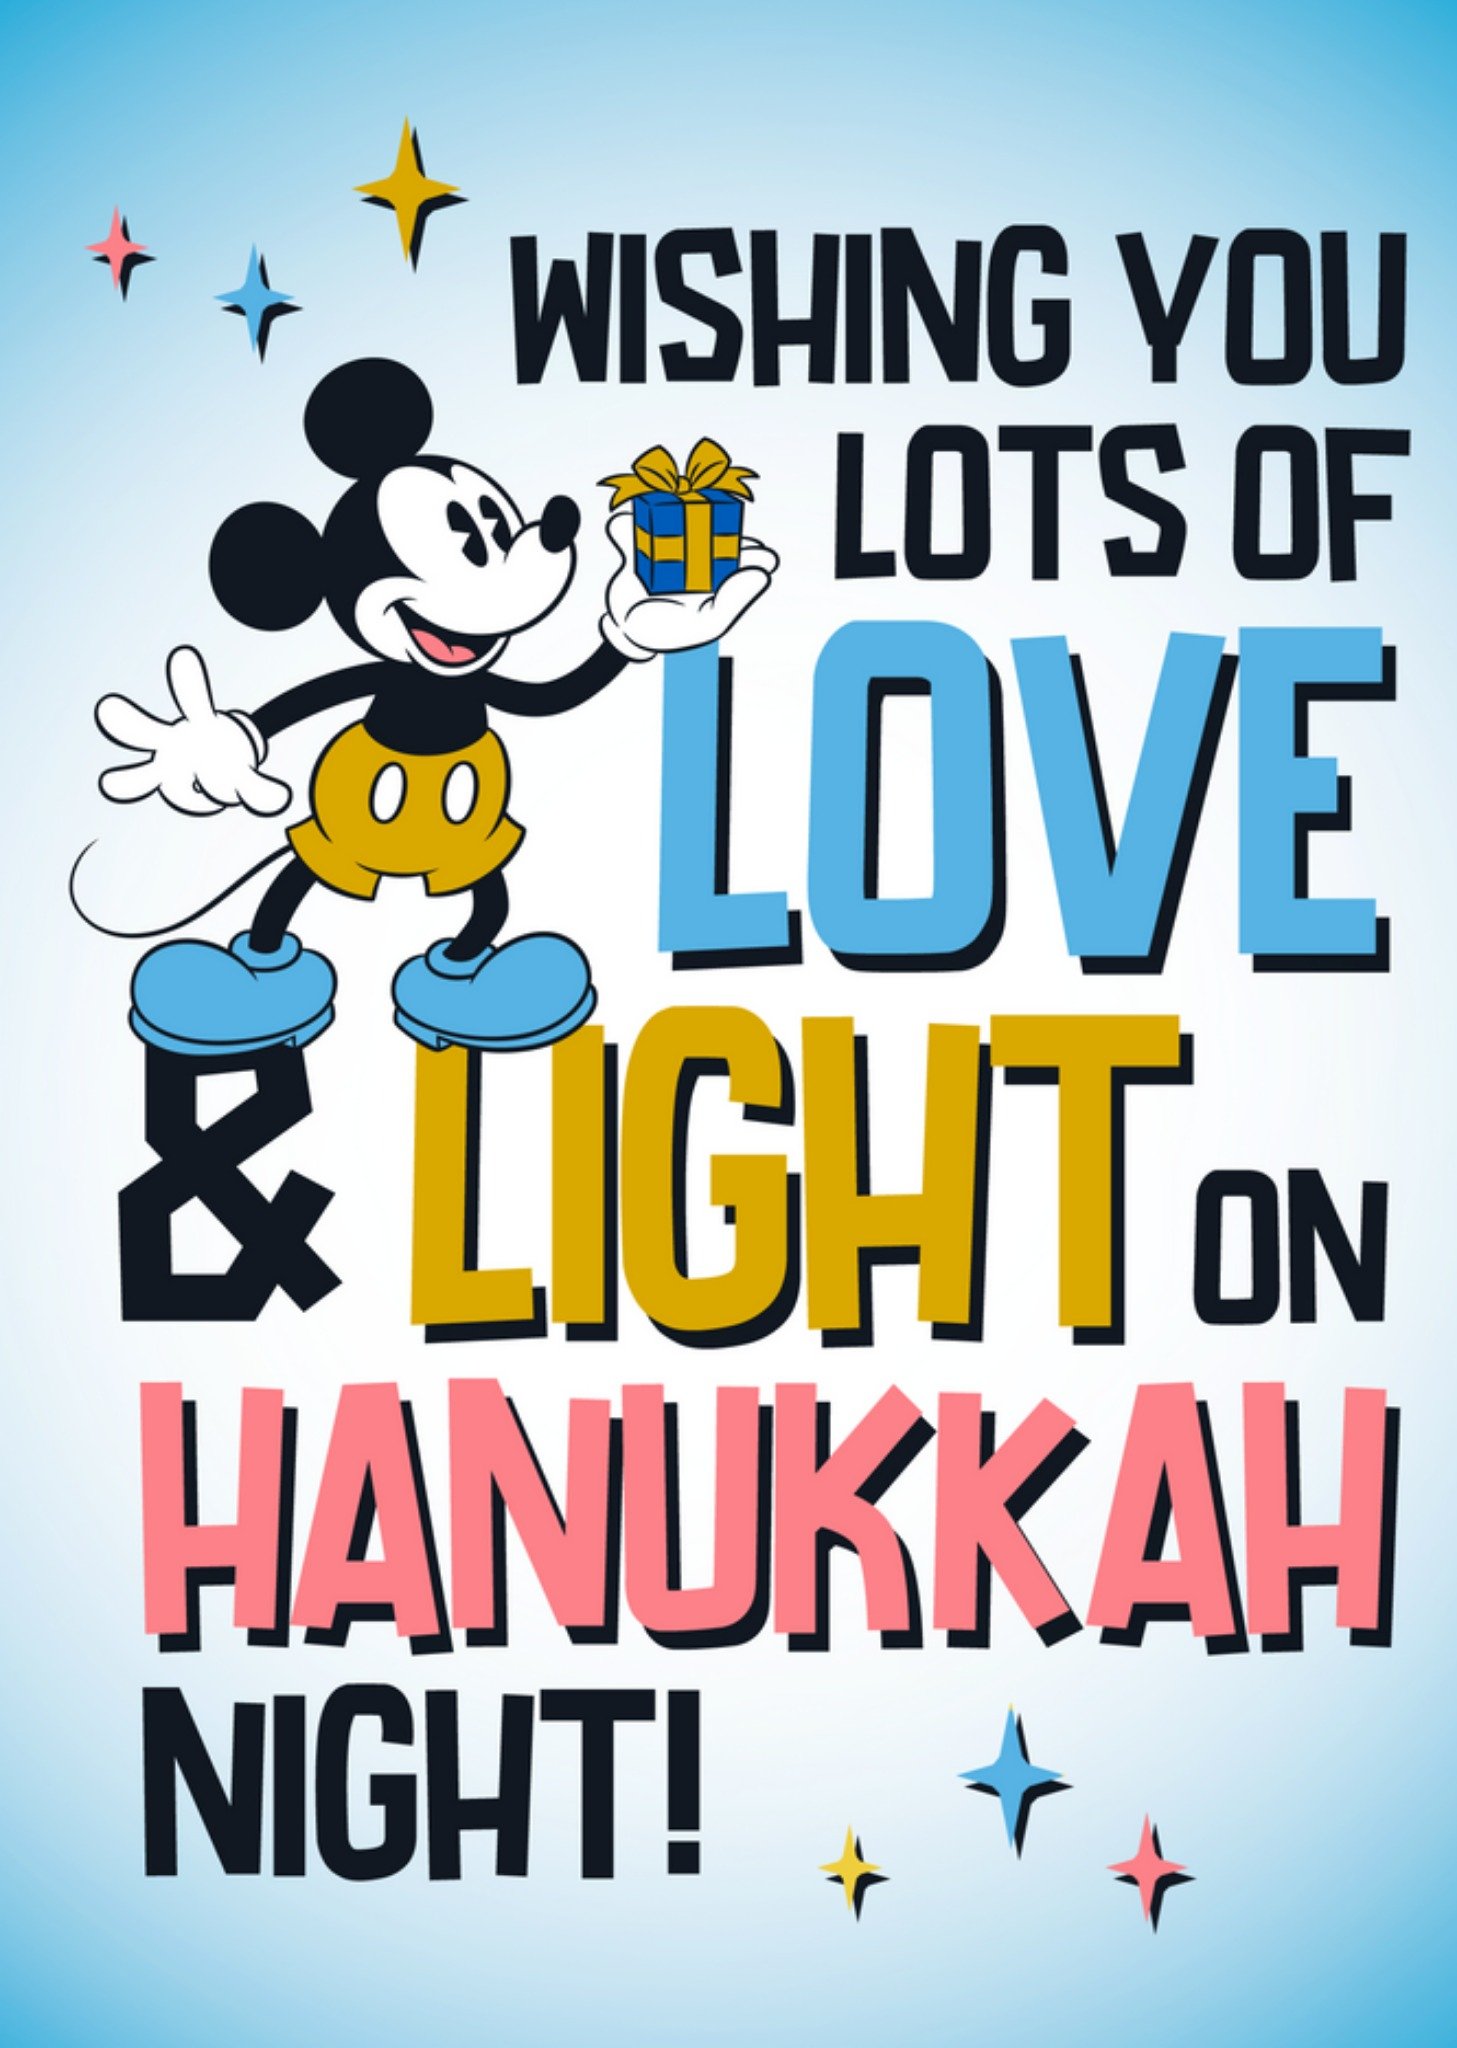 Mickey Mouse Disney Wishing You Lots Of Love & Light On Hanukkah Night Card, Large